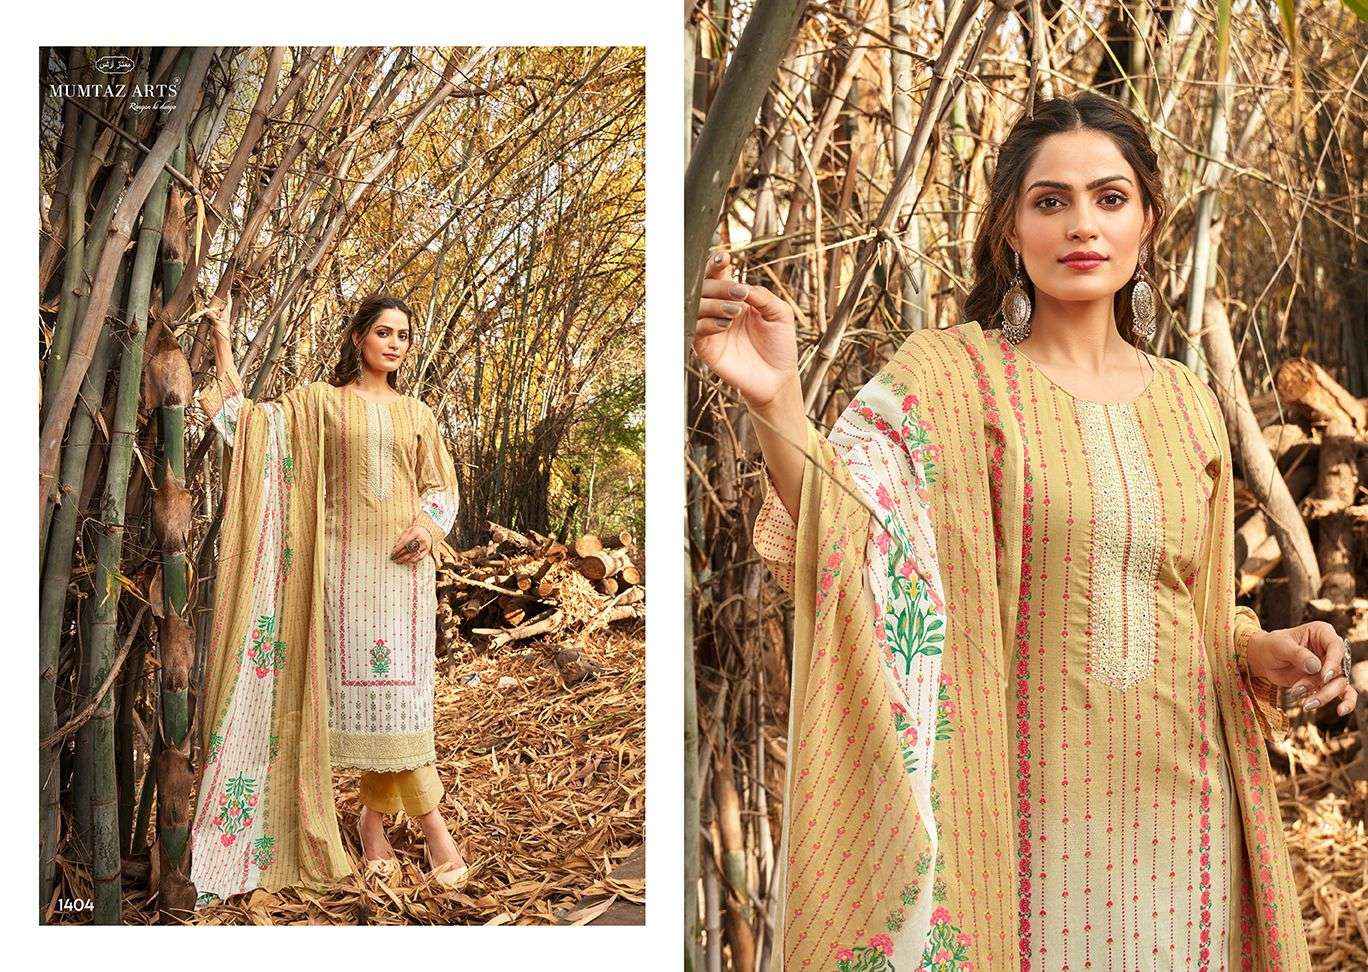 Mumtaz Arts Summer Shine Camric Lawn Cotton Dress Material 6 pcs Catalogue